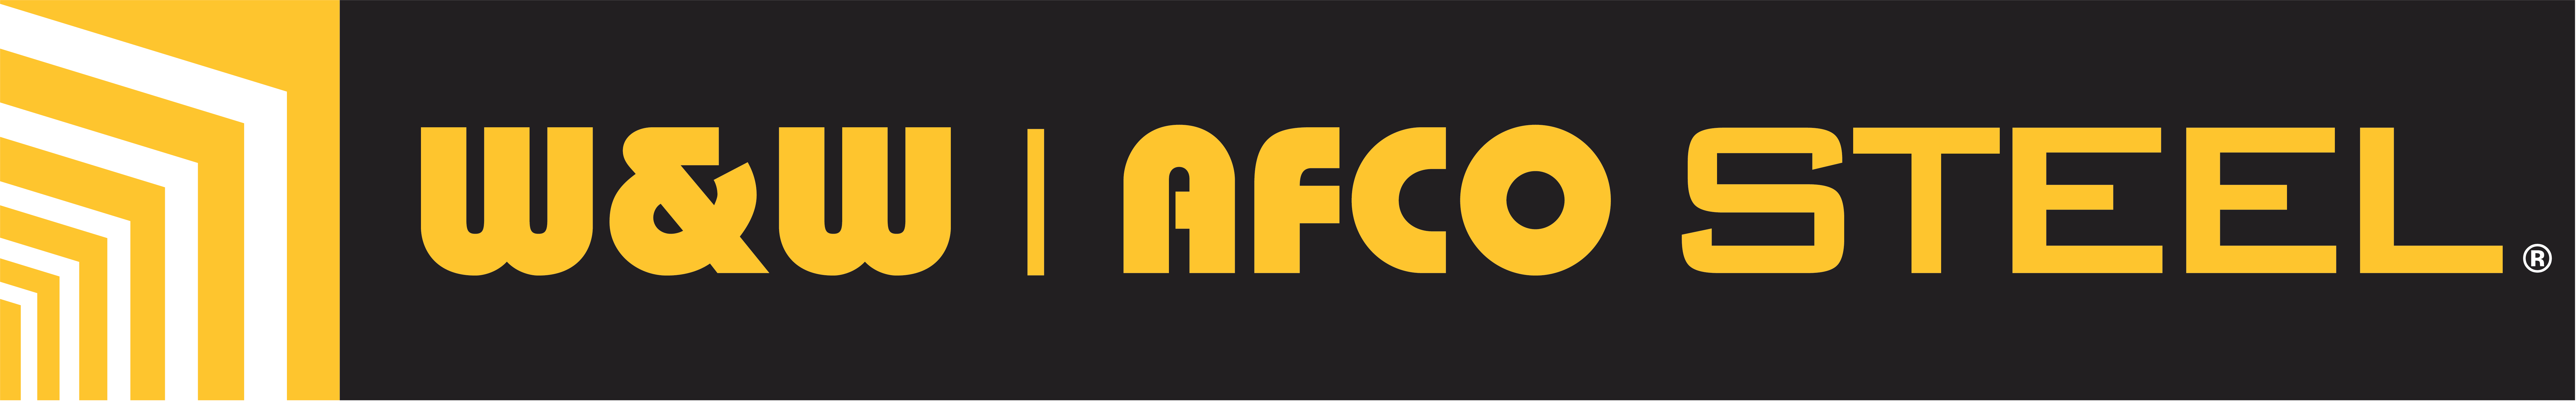 W&W|Afco Steel Logo